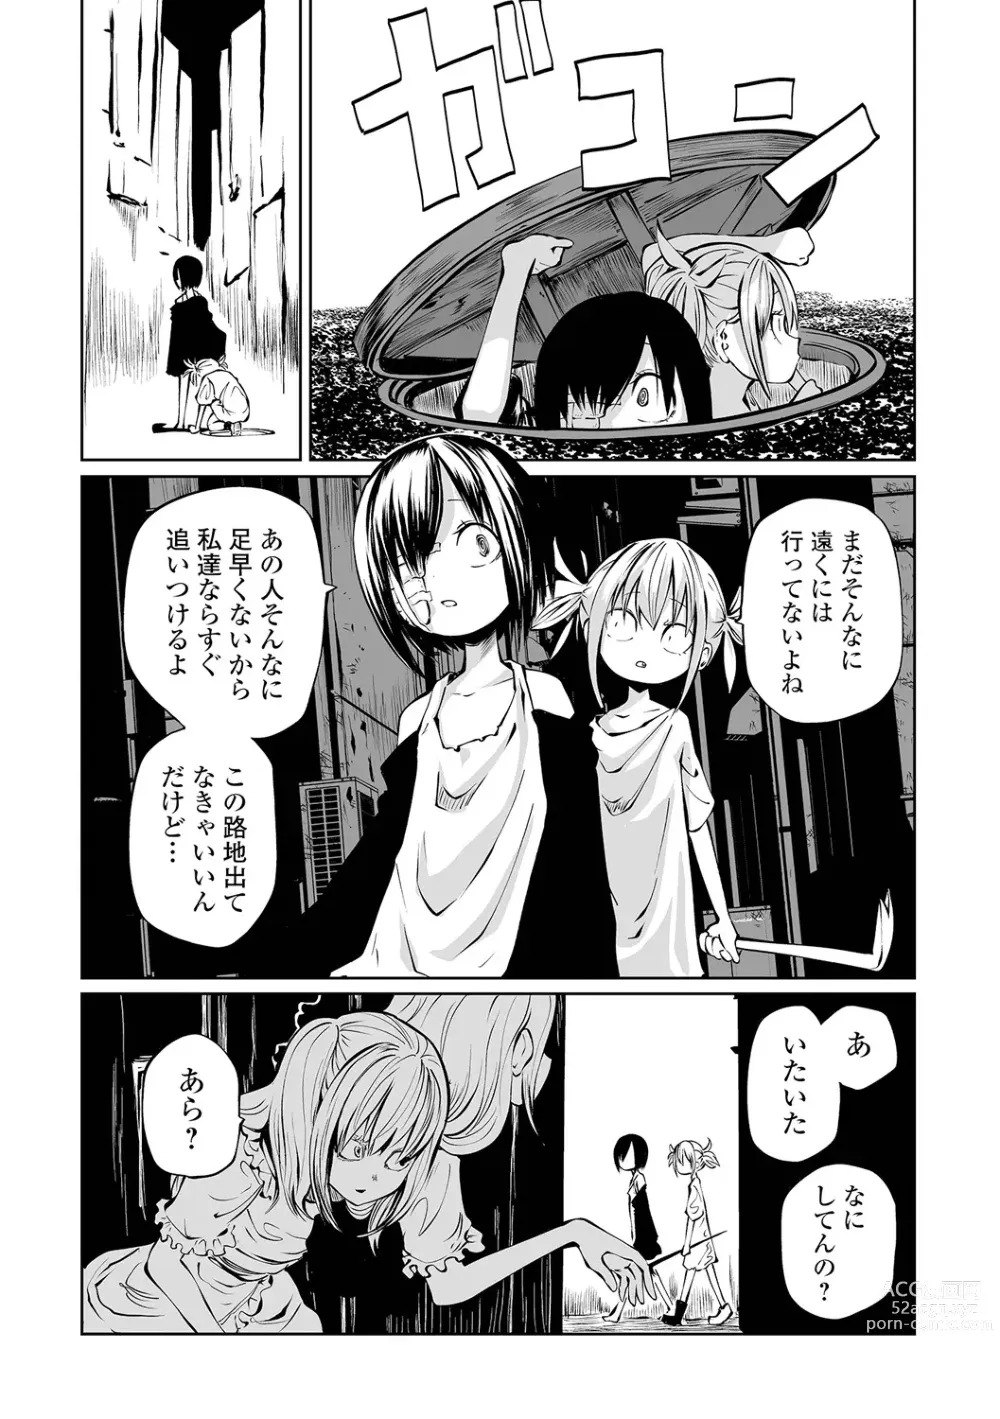 Page 101 of manga Ryona King Vol.28